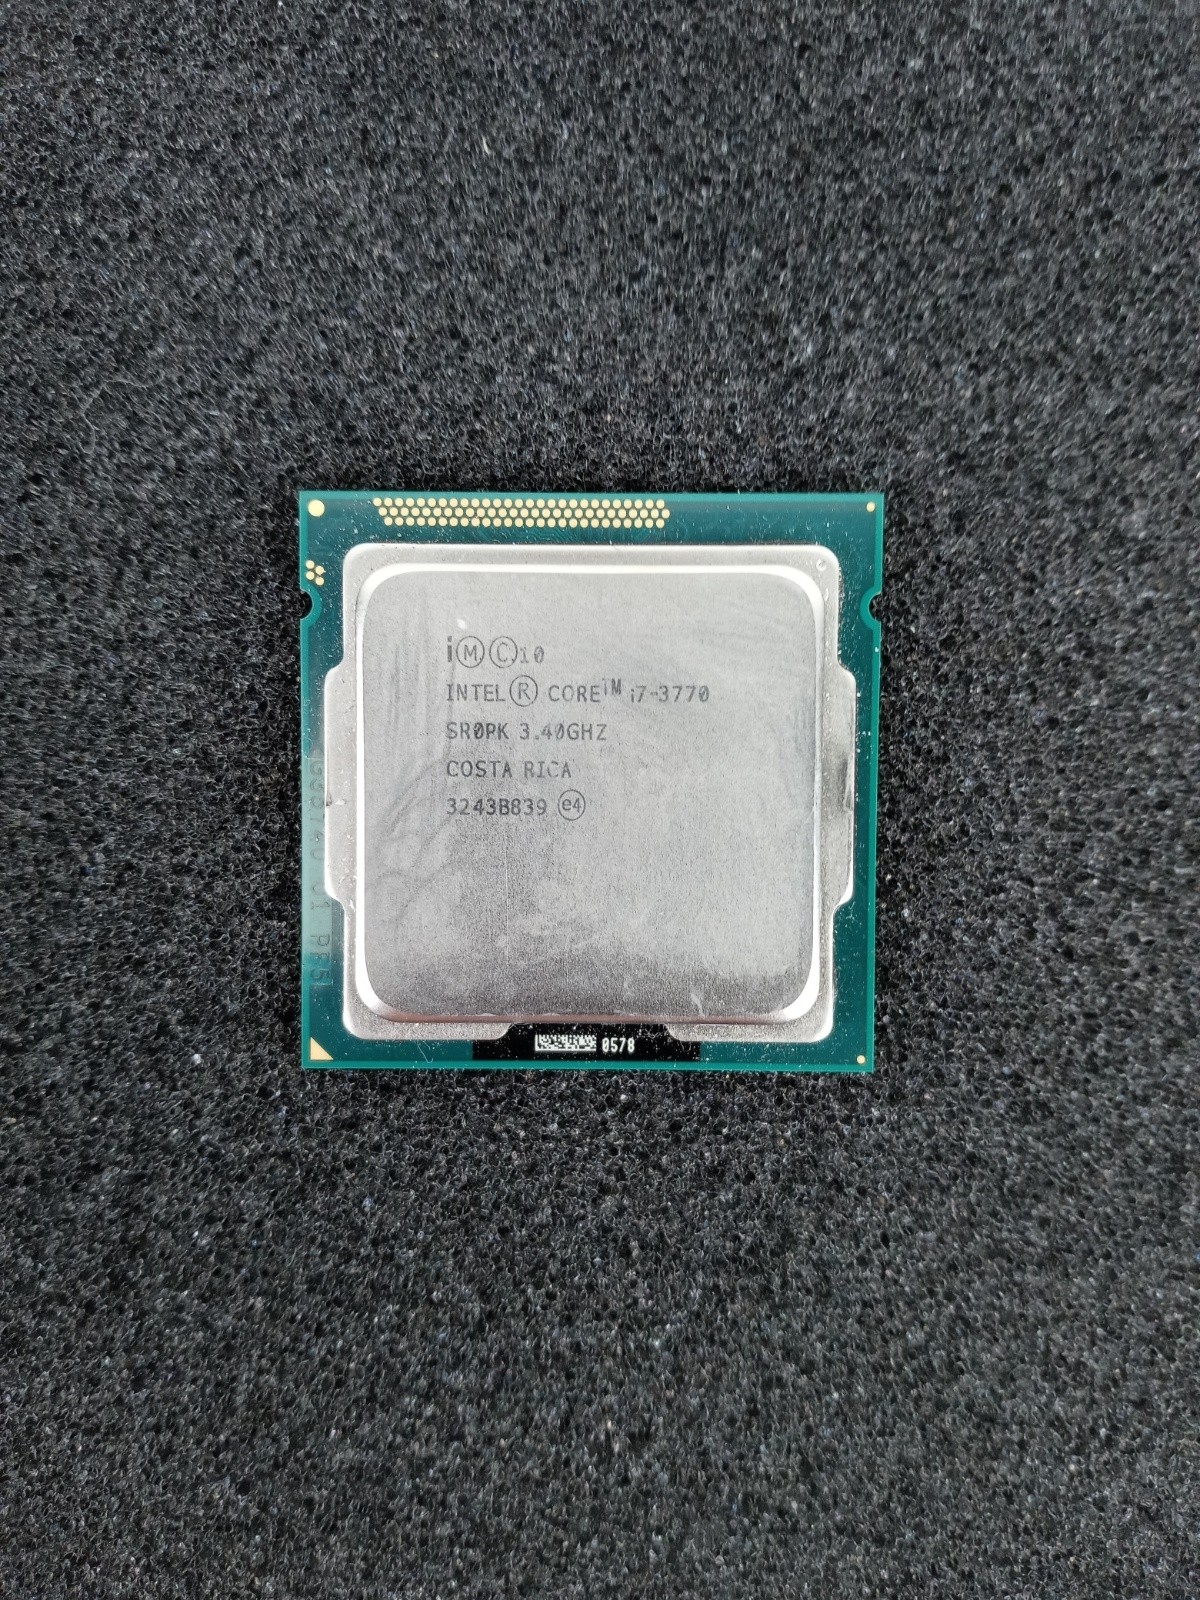 Intel Core i7-3770 3.4 GHz Quad Core LGA1155 Processor Tested, SR0PK